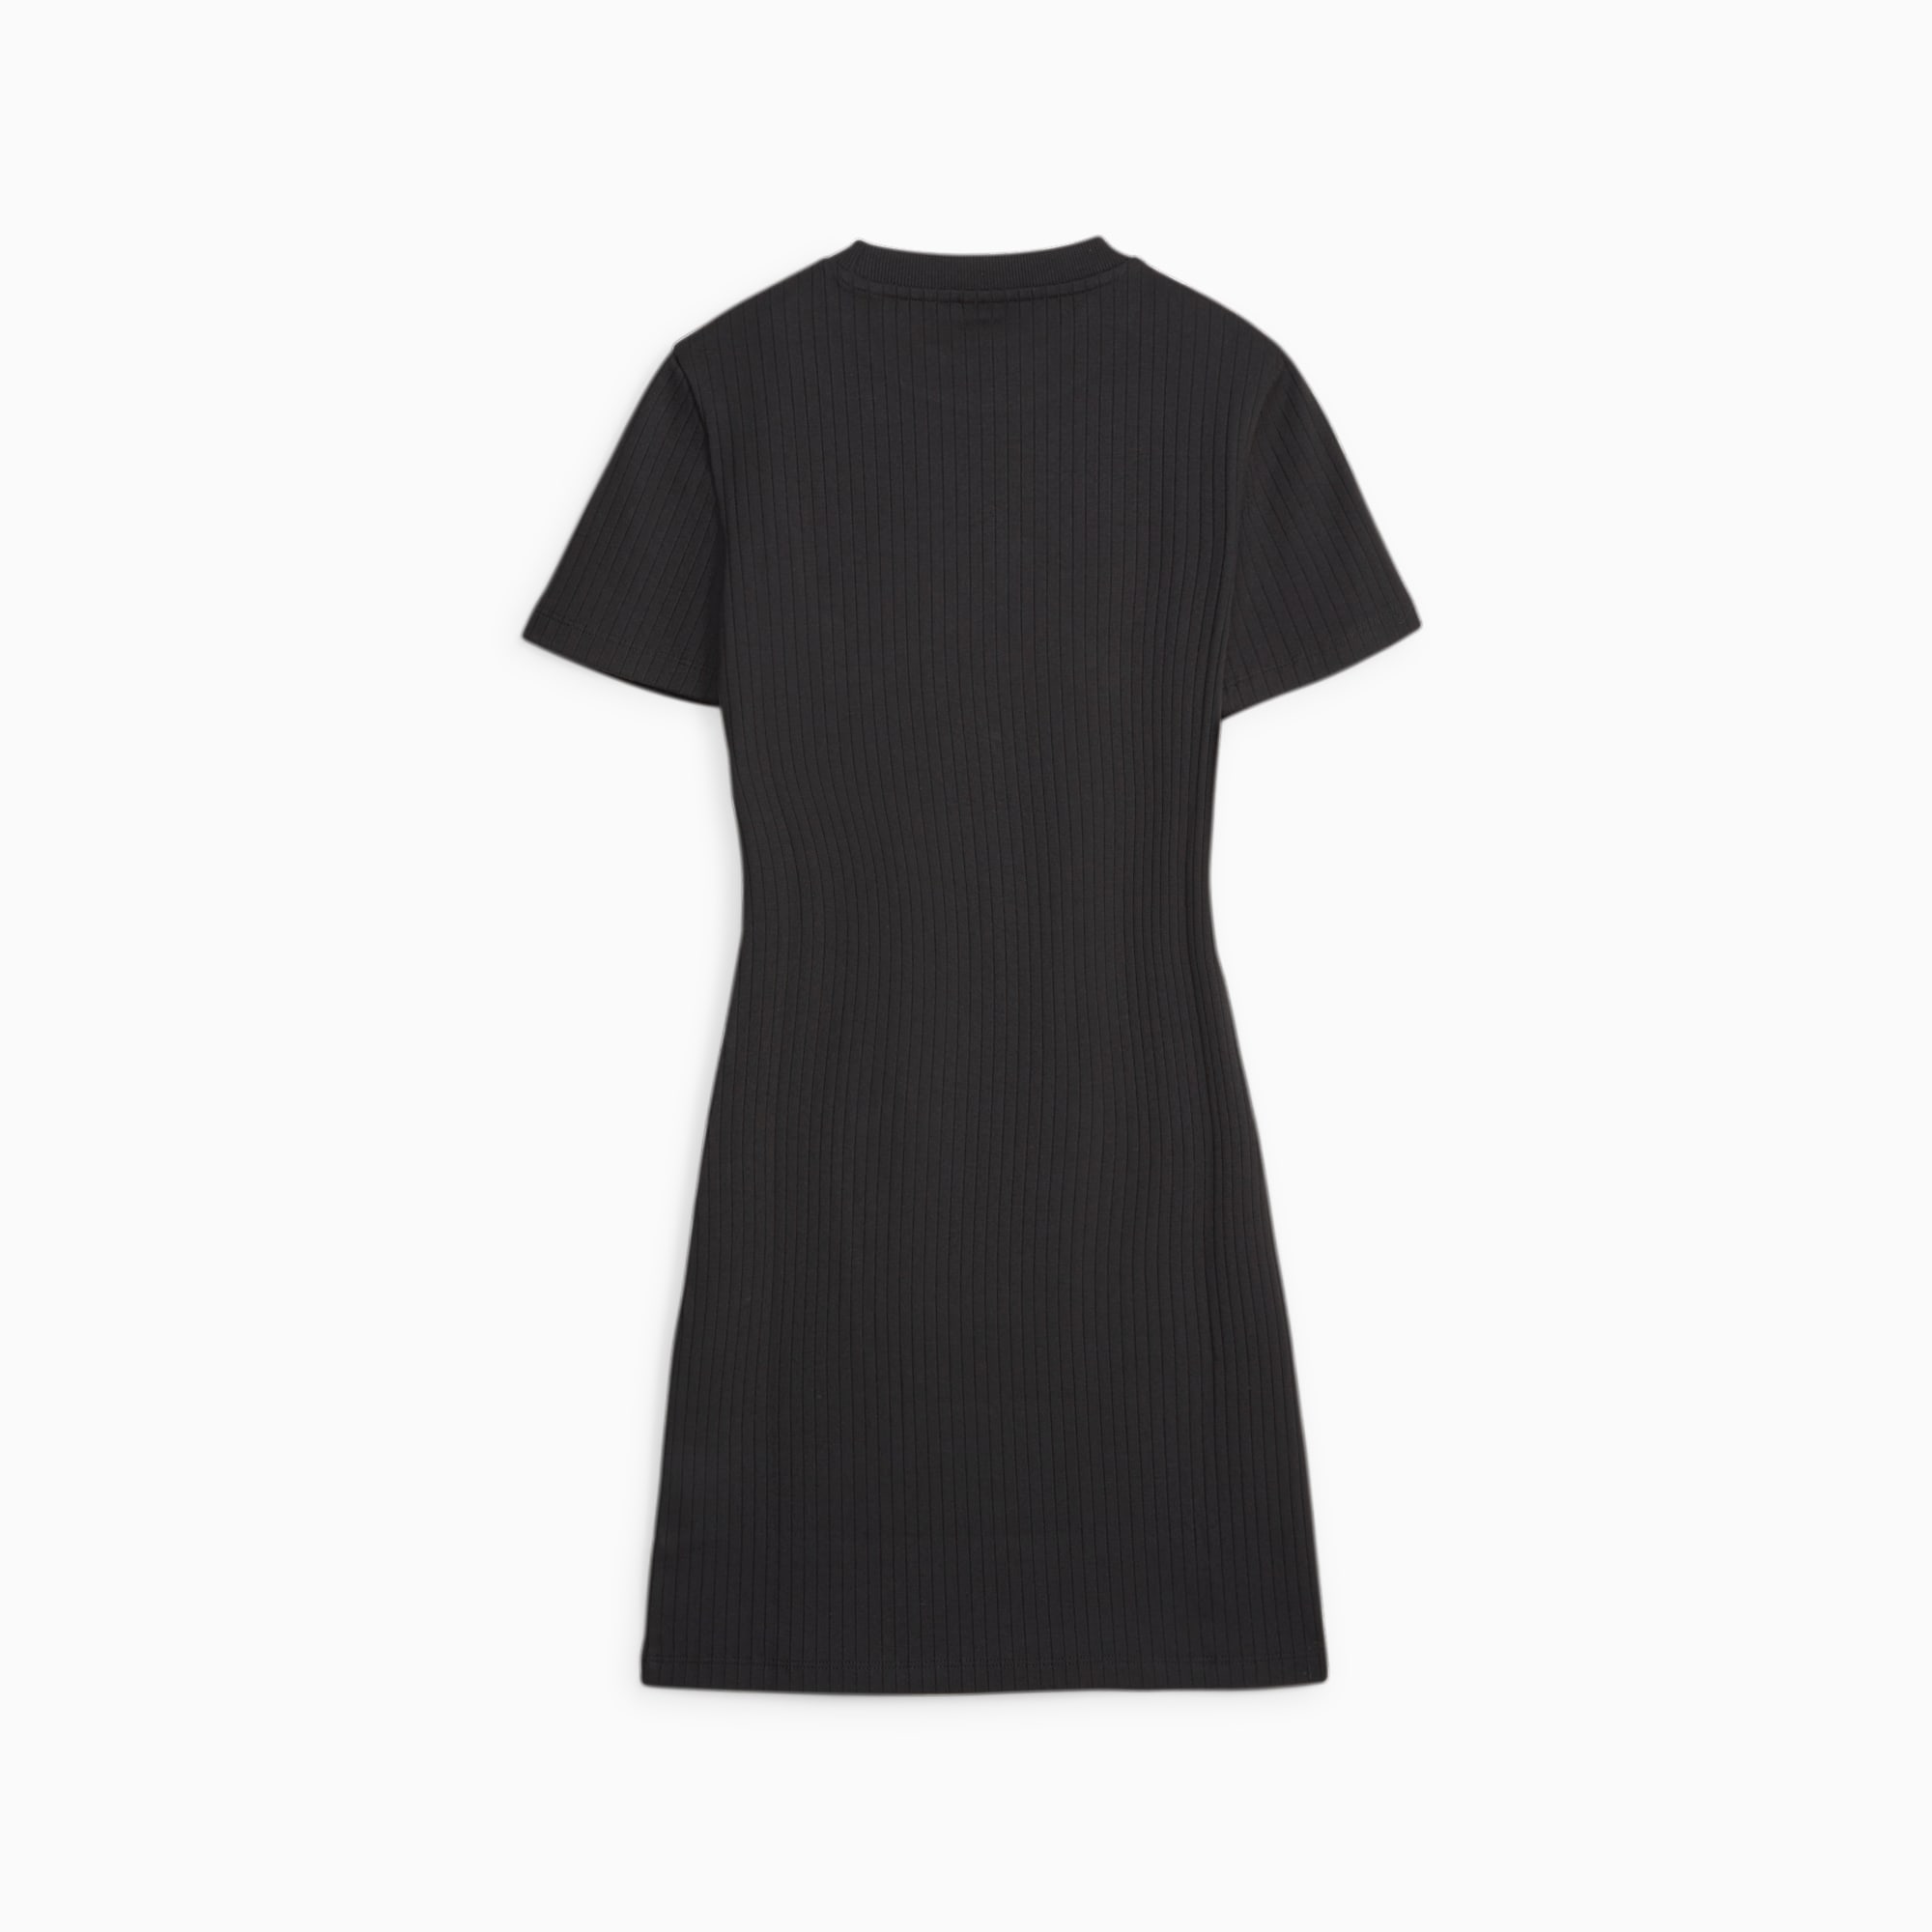 PUMA Classics Women's Ribbed Dress, Black, Size L, Clothing